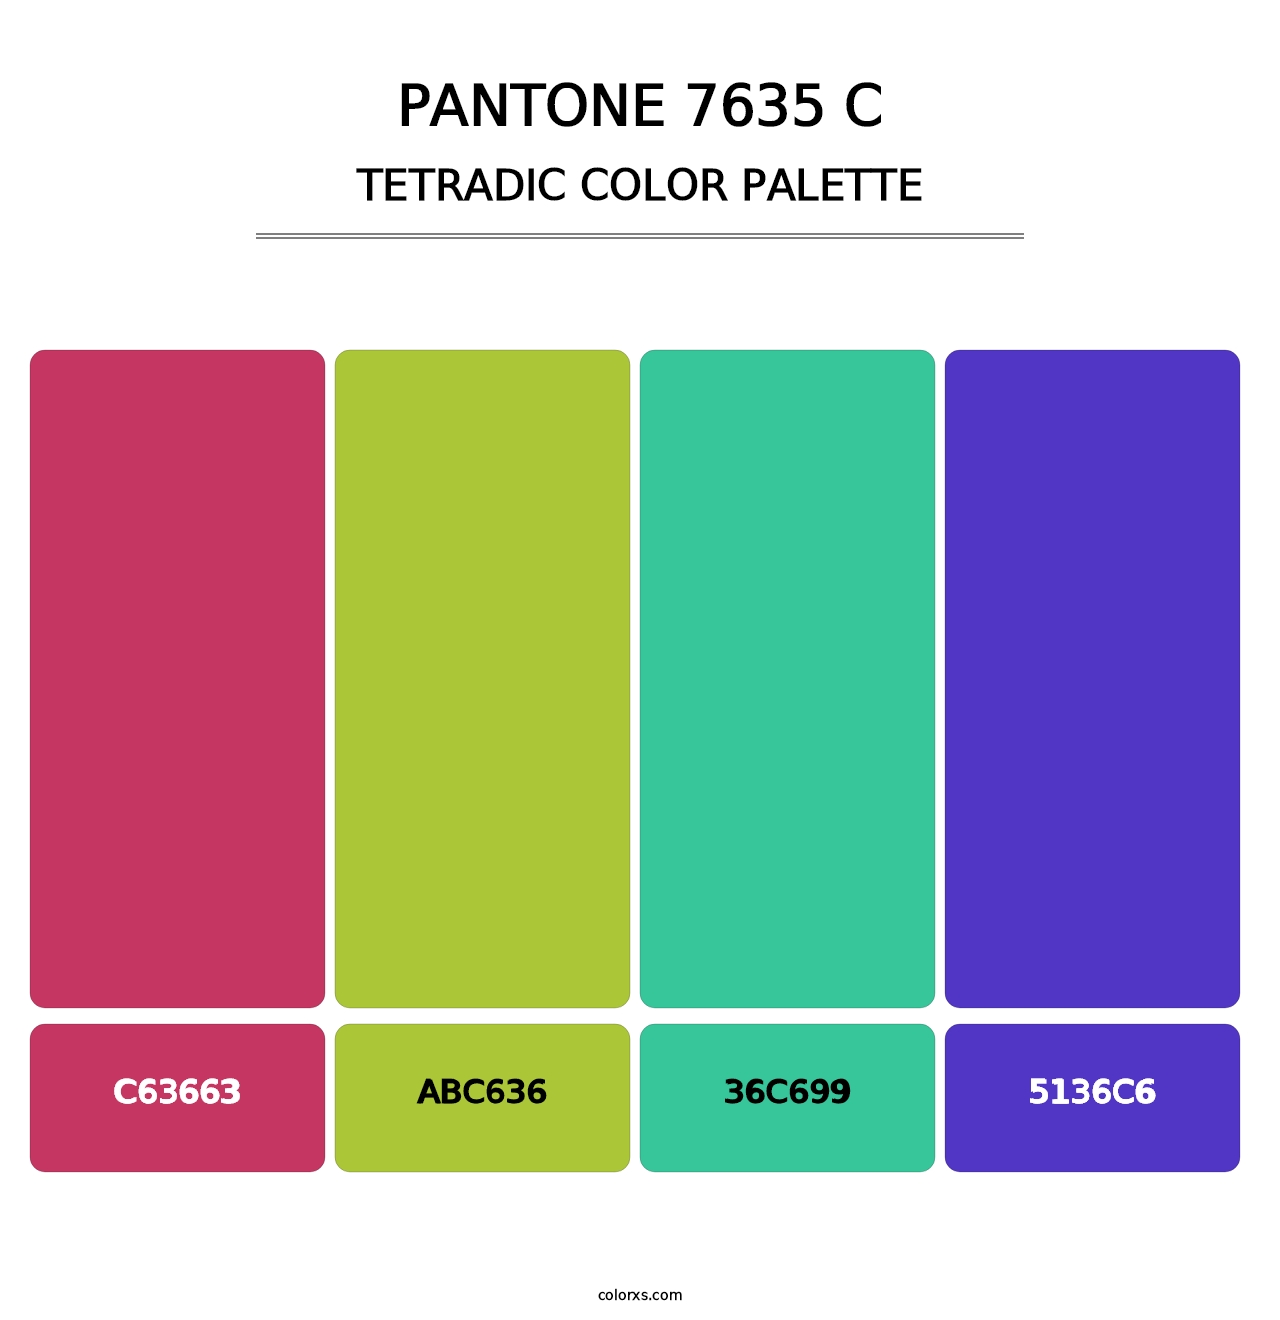 PANTONE 7635 C - Tetradic Color Palette